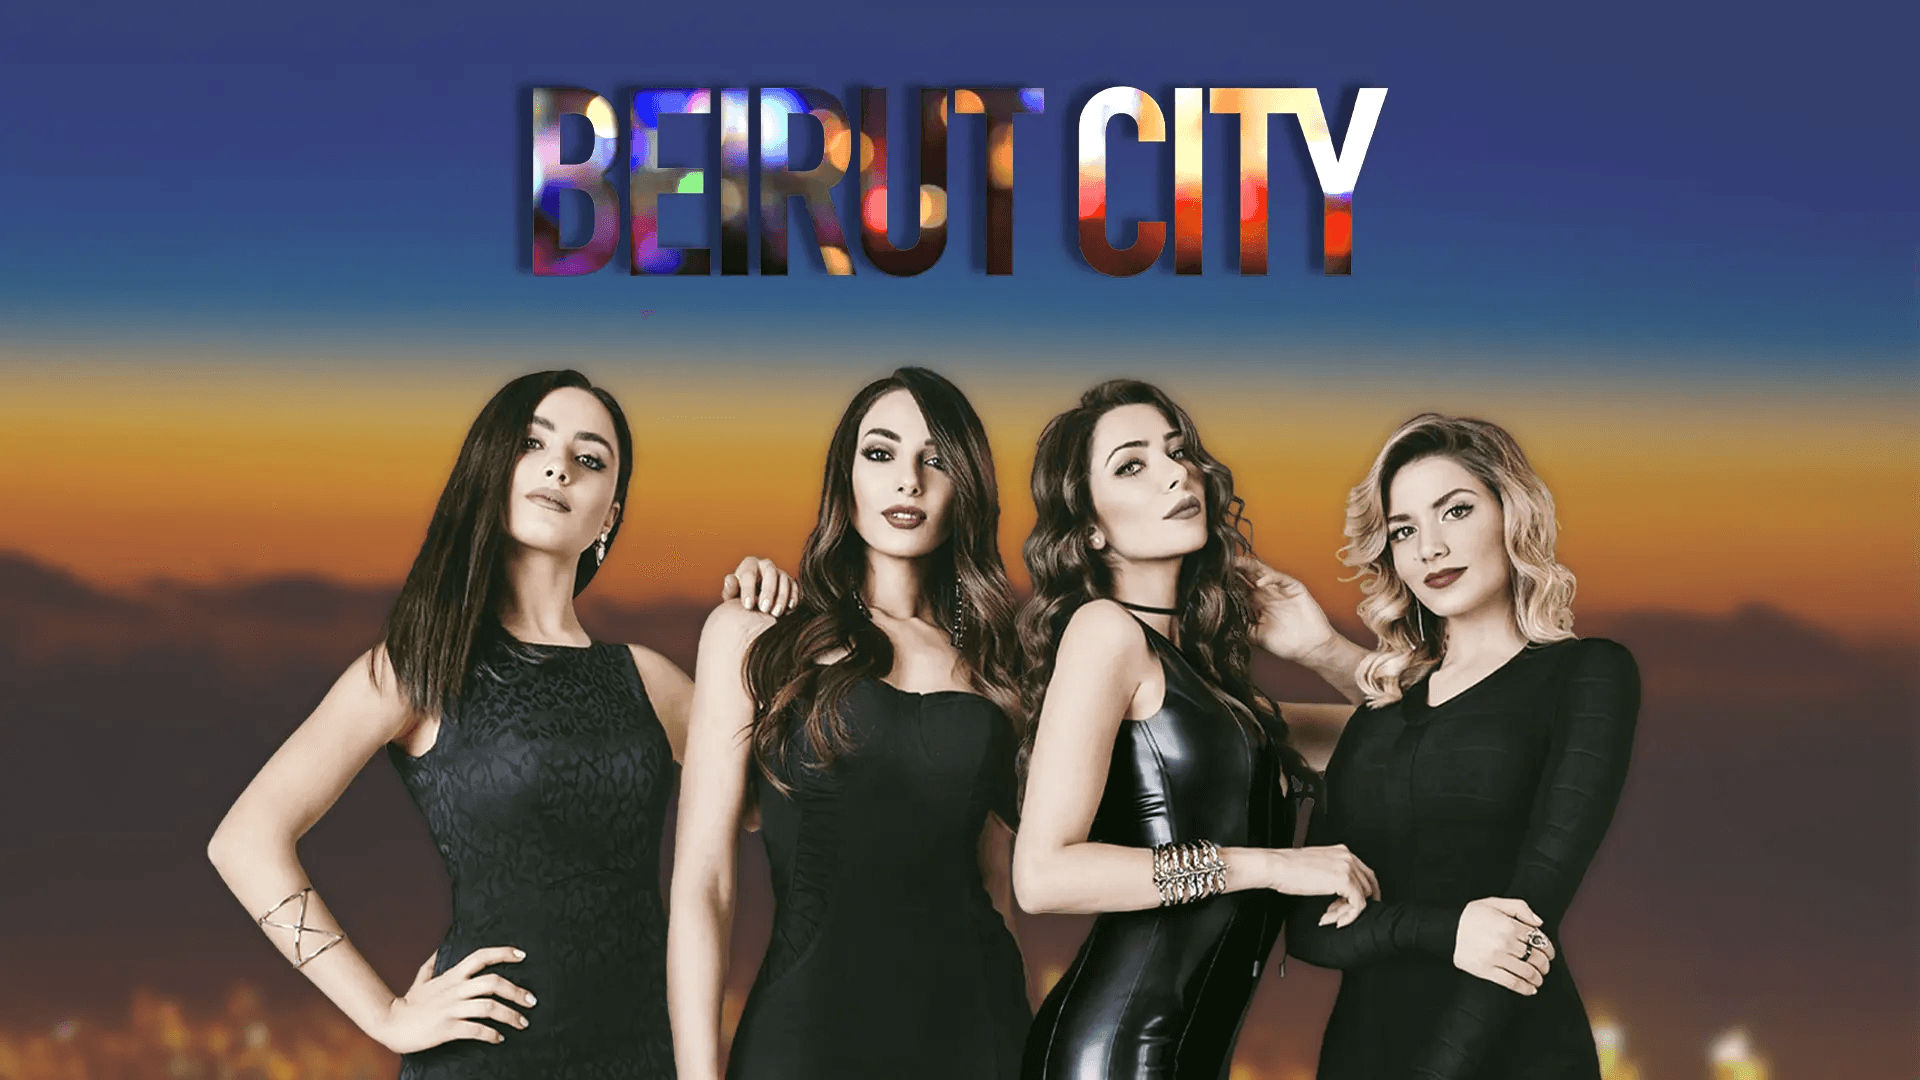 images/1_FastTV/Serials/Beirut City/beirut city 1.png